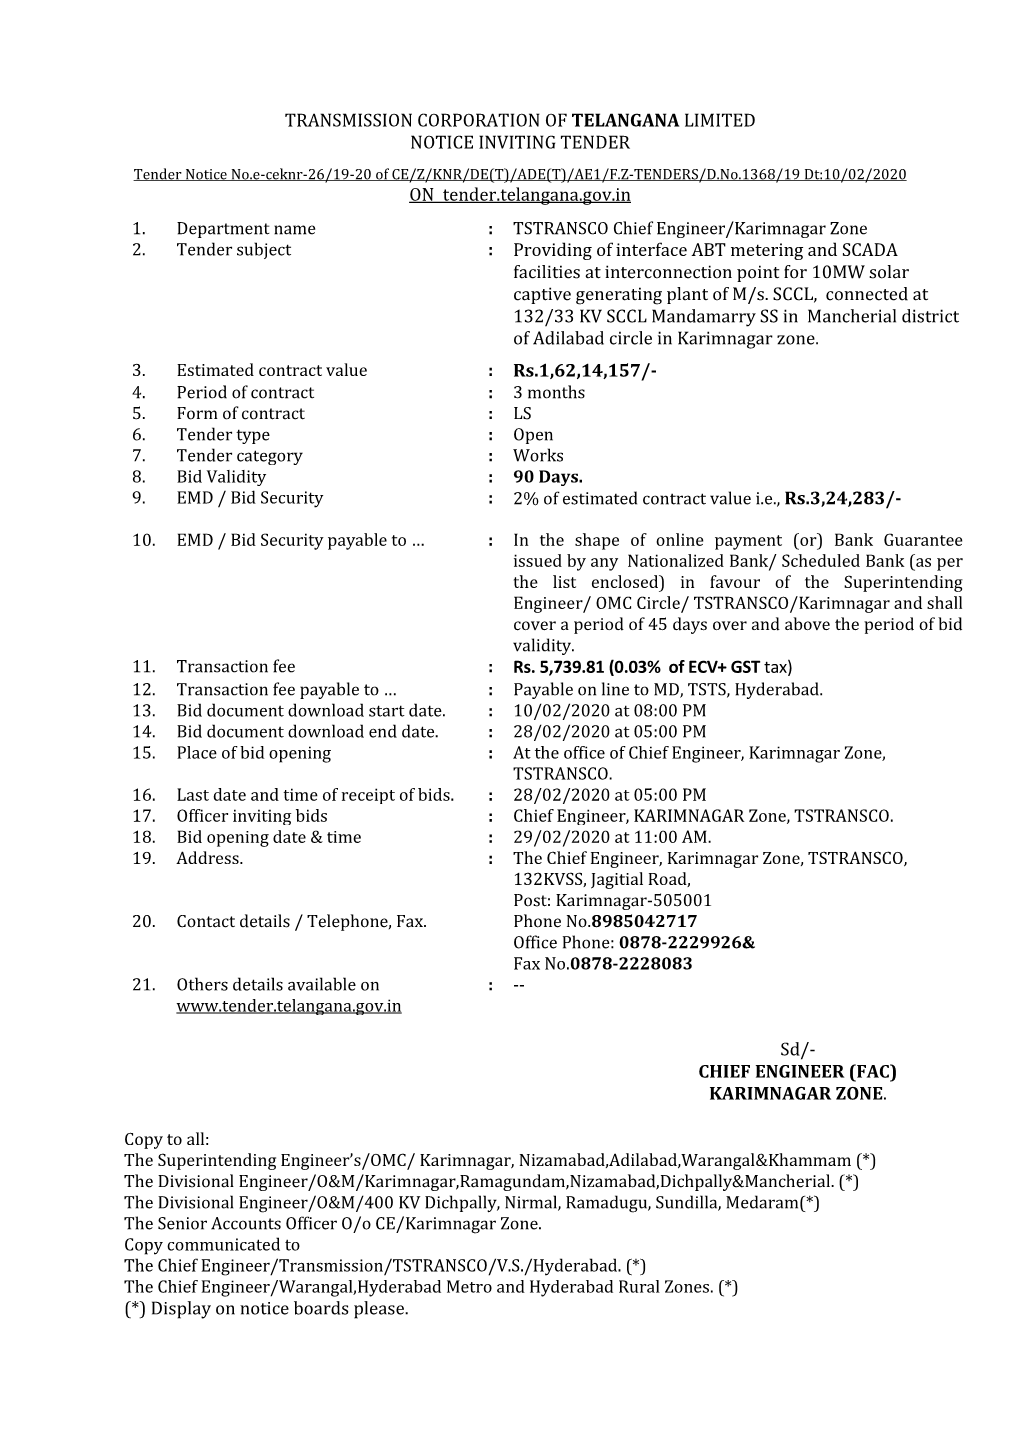 Transmission Corporation of Telangana Limited Notice Inviting Tender